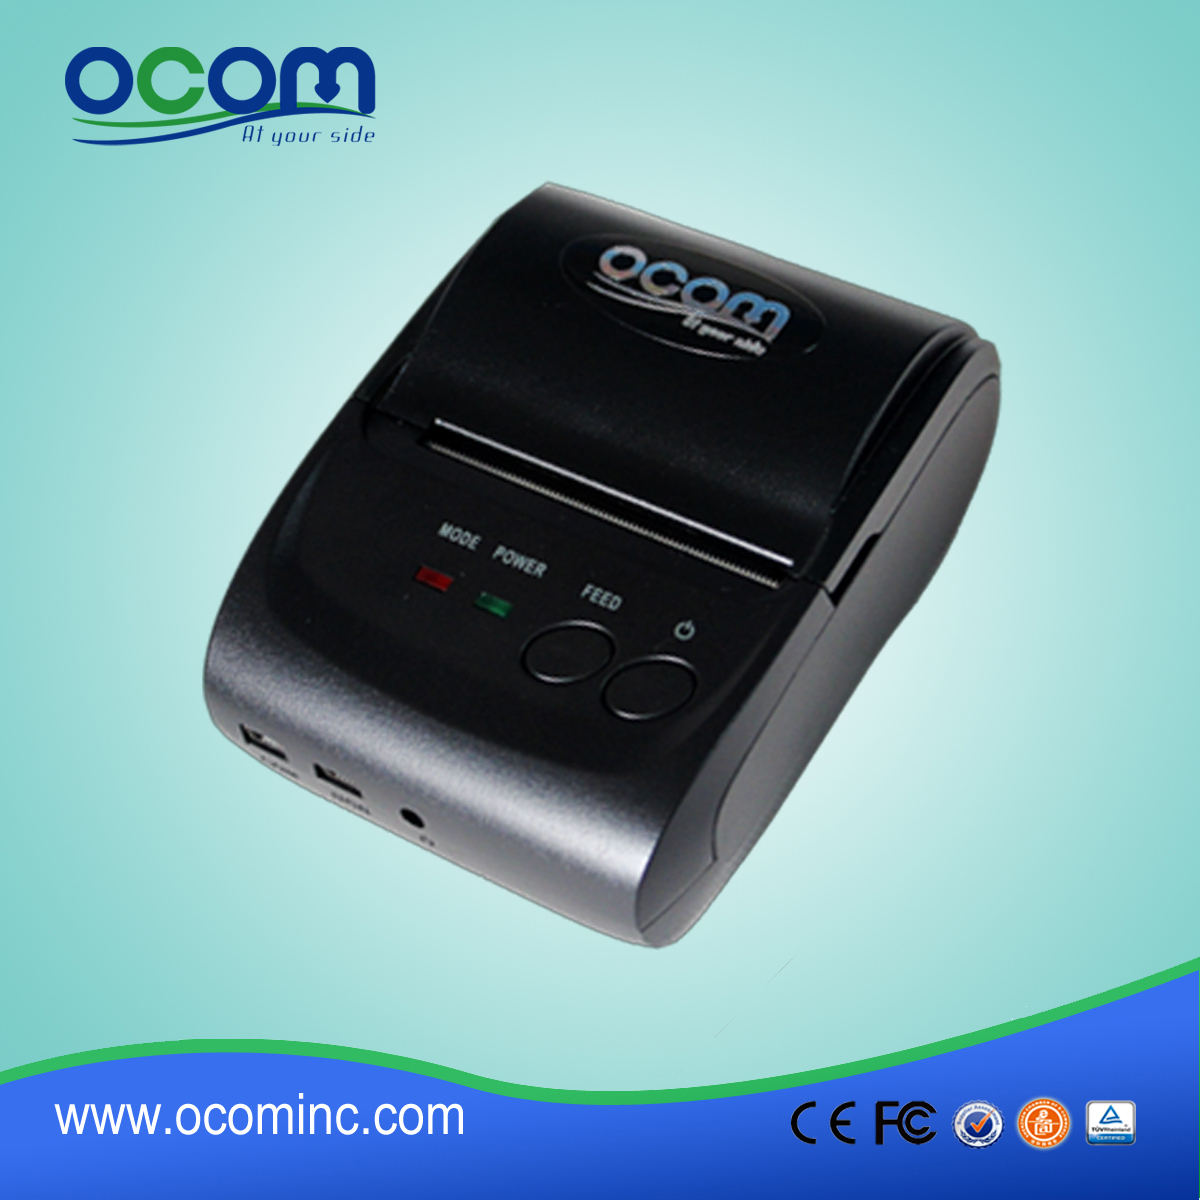 OCPP-M05: 58mm Tragbare Bluetooth-Thermodrucker mit SDK